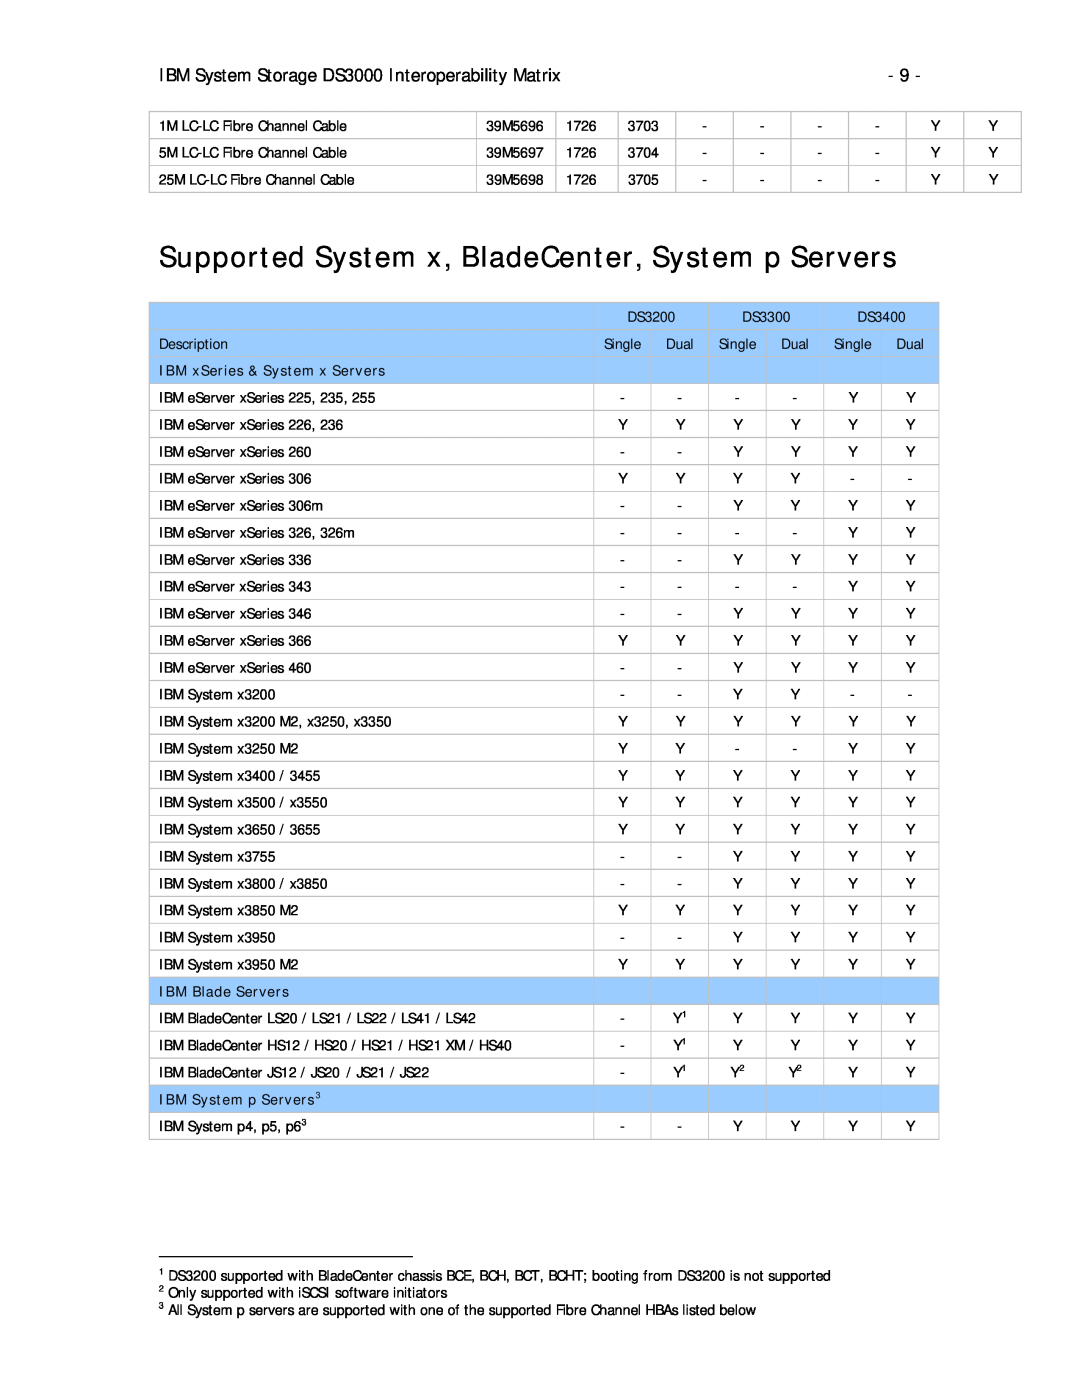 IBM DS3000 Series Supported System x, BladeCenter, System p Servers, IBM System Storage DS3000 Interoperability Matrix 